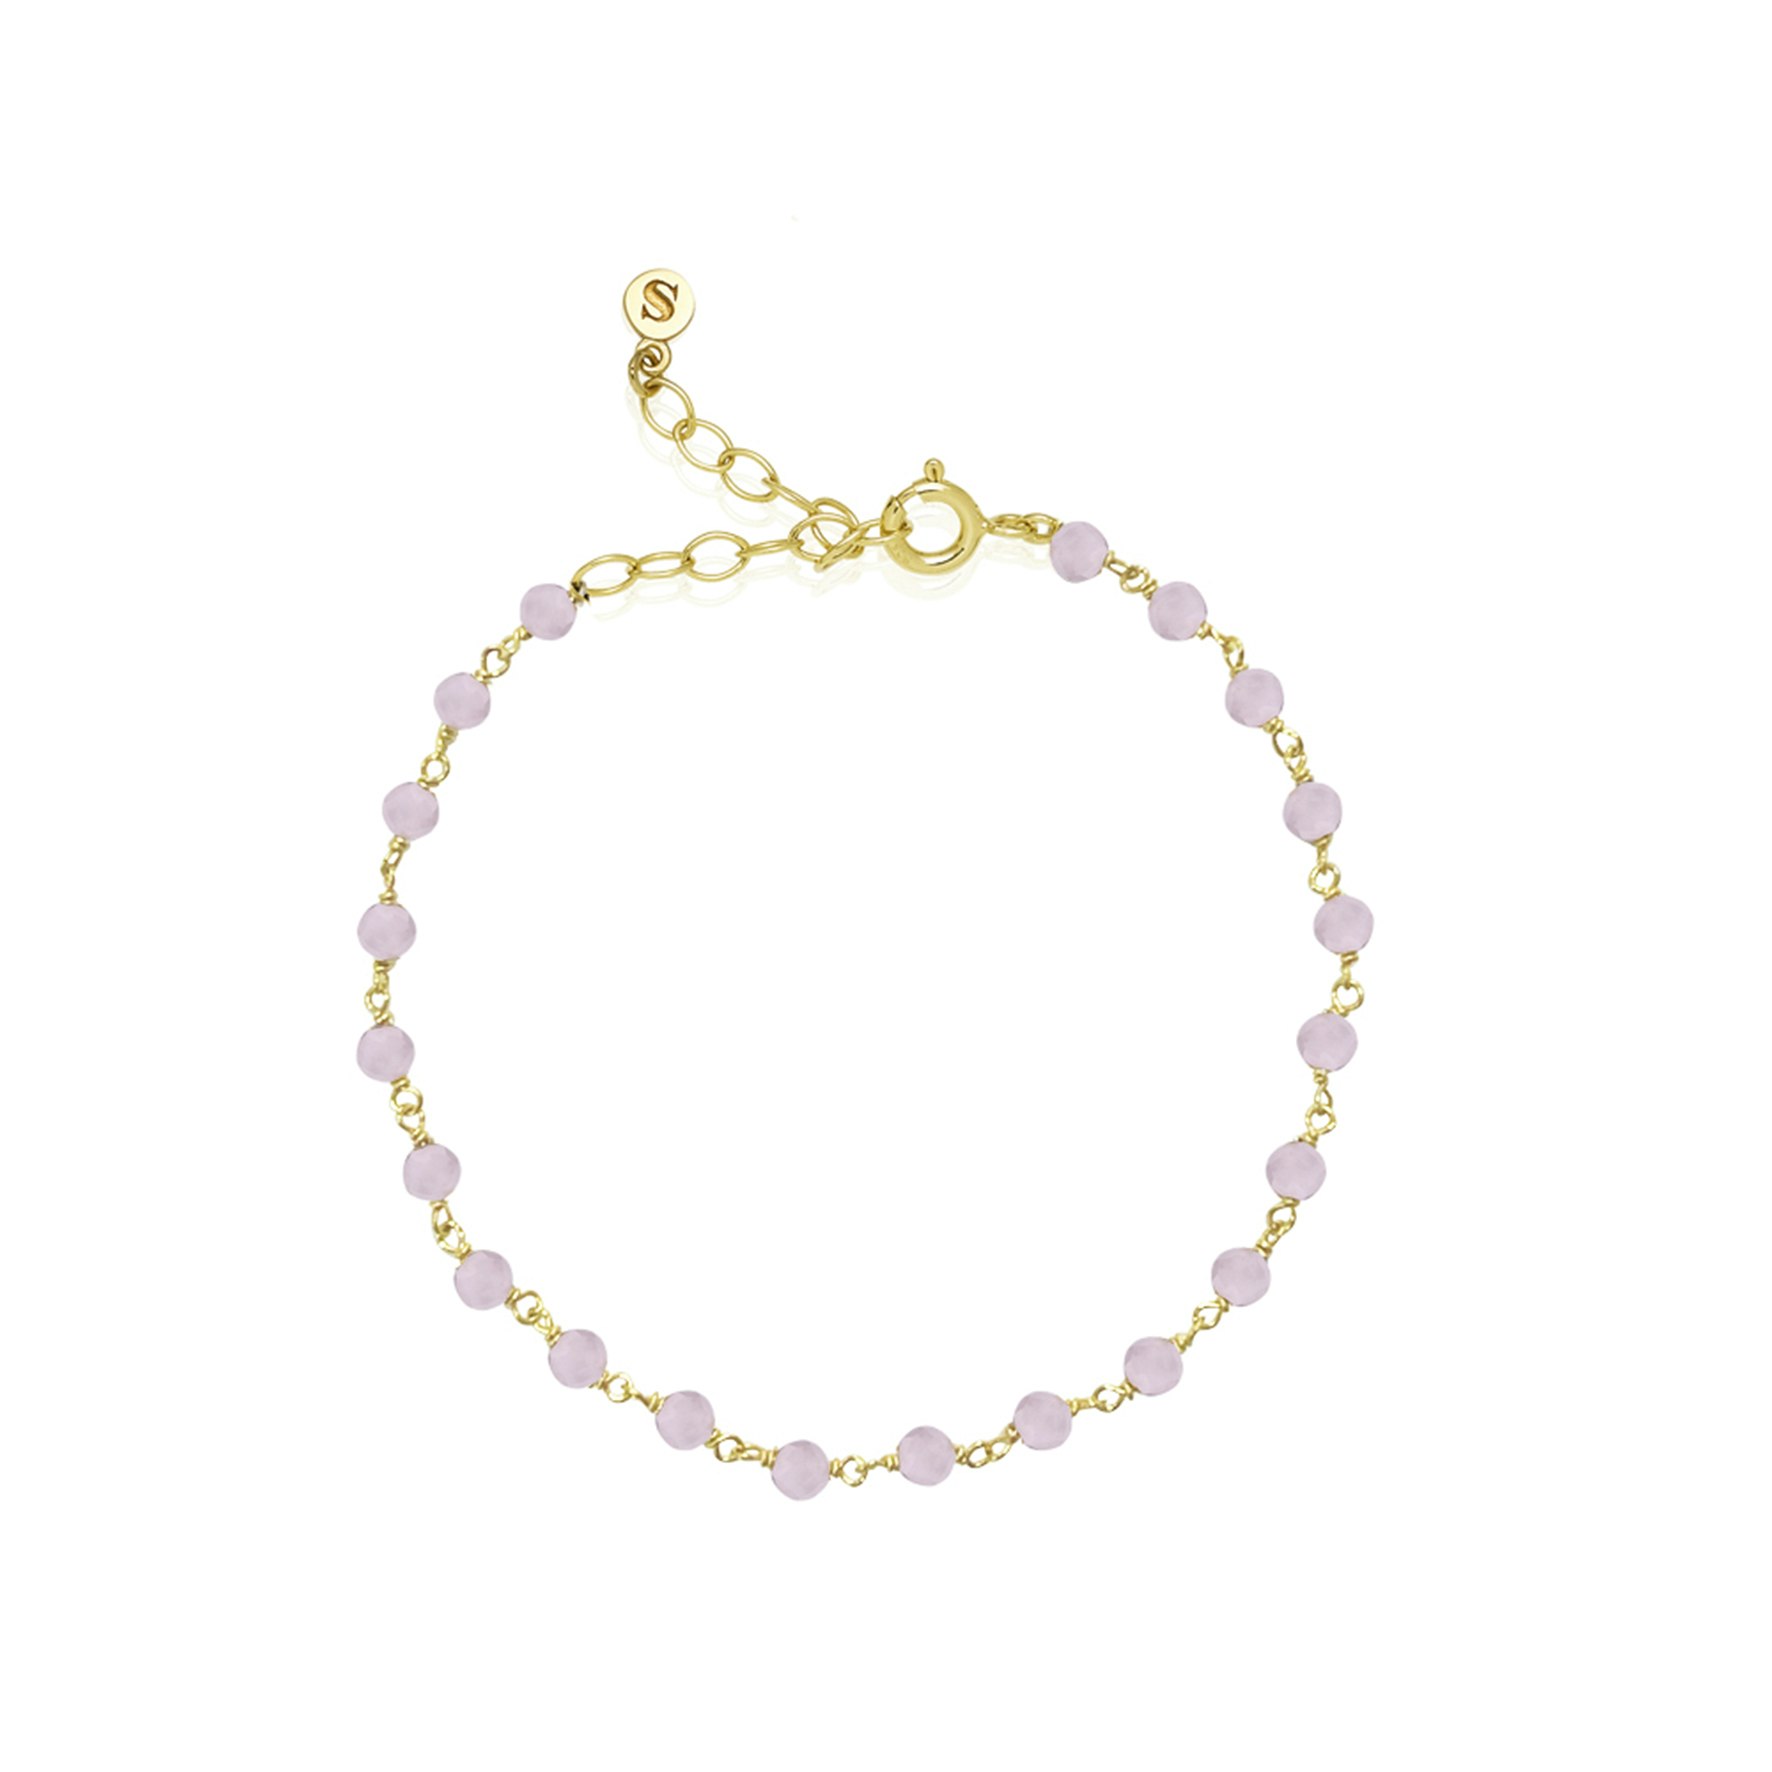 Boheme Pink Bracelet von Sistie in Vergoldet-Silber Sterling 925